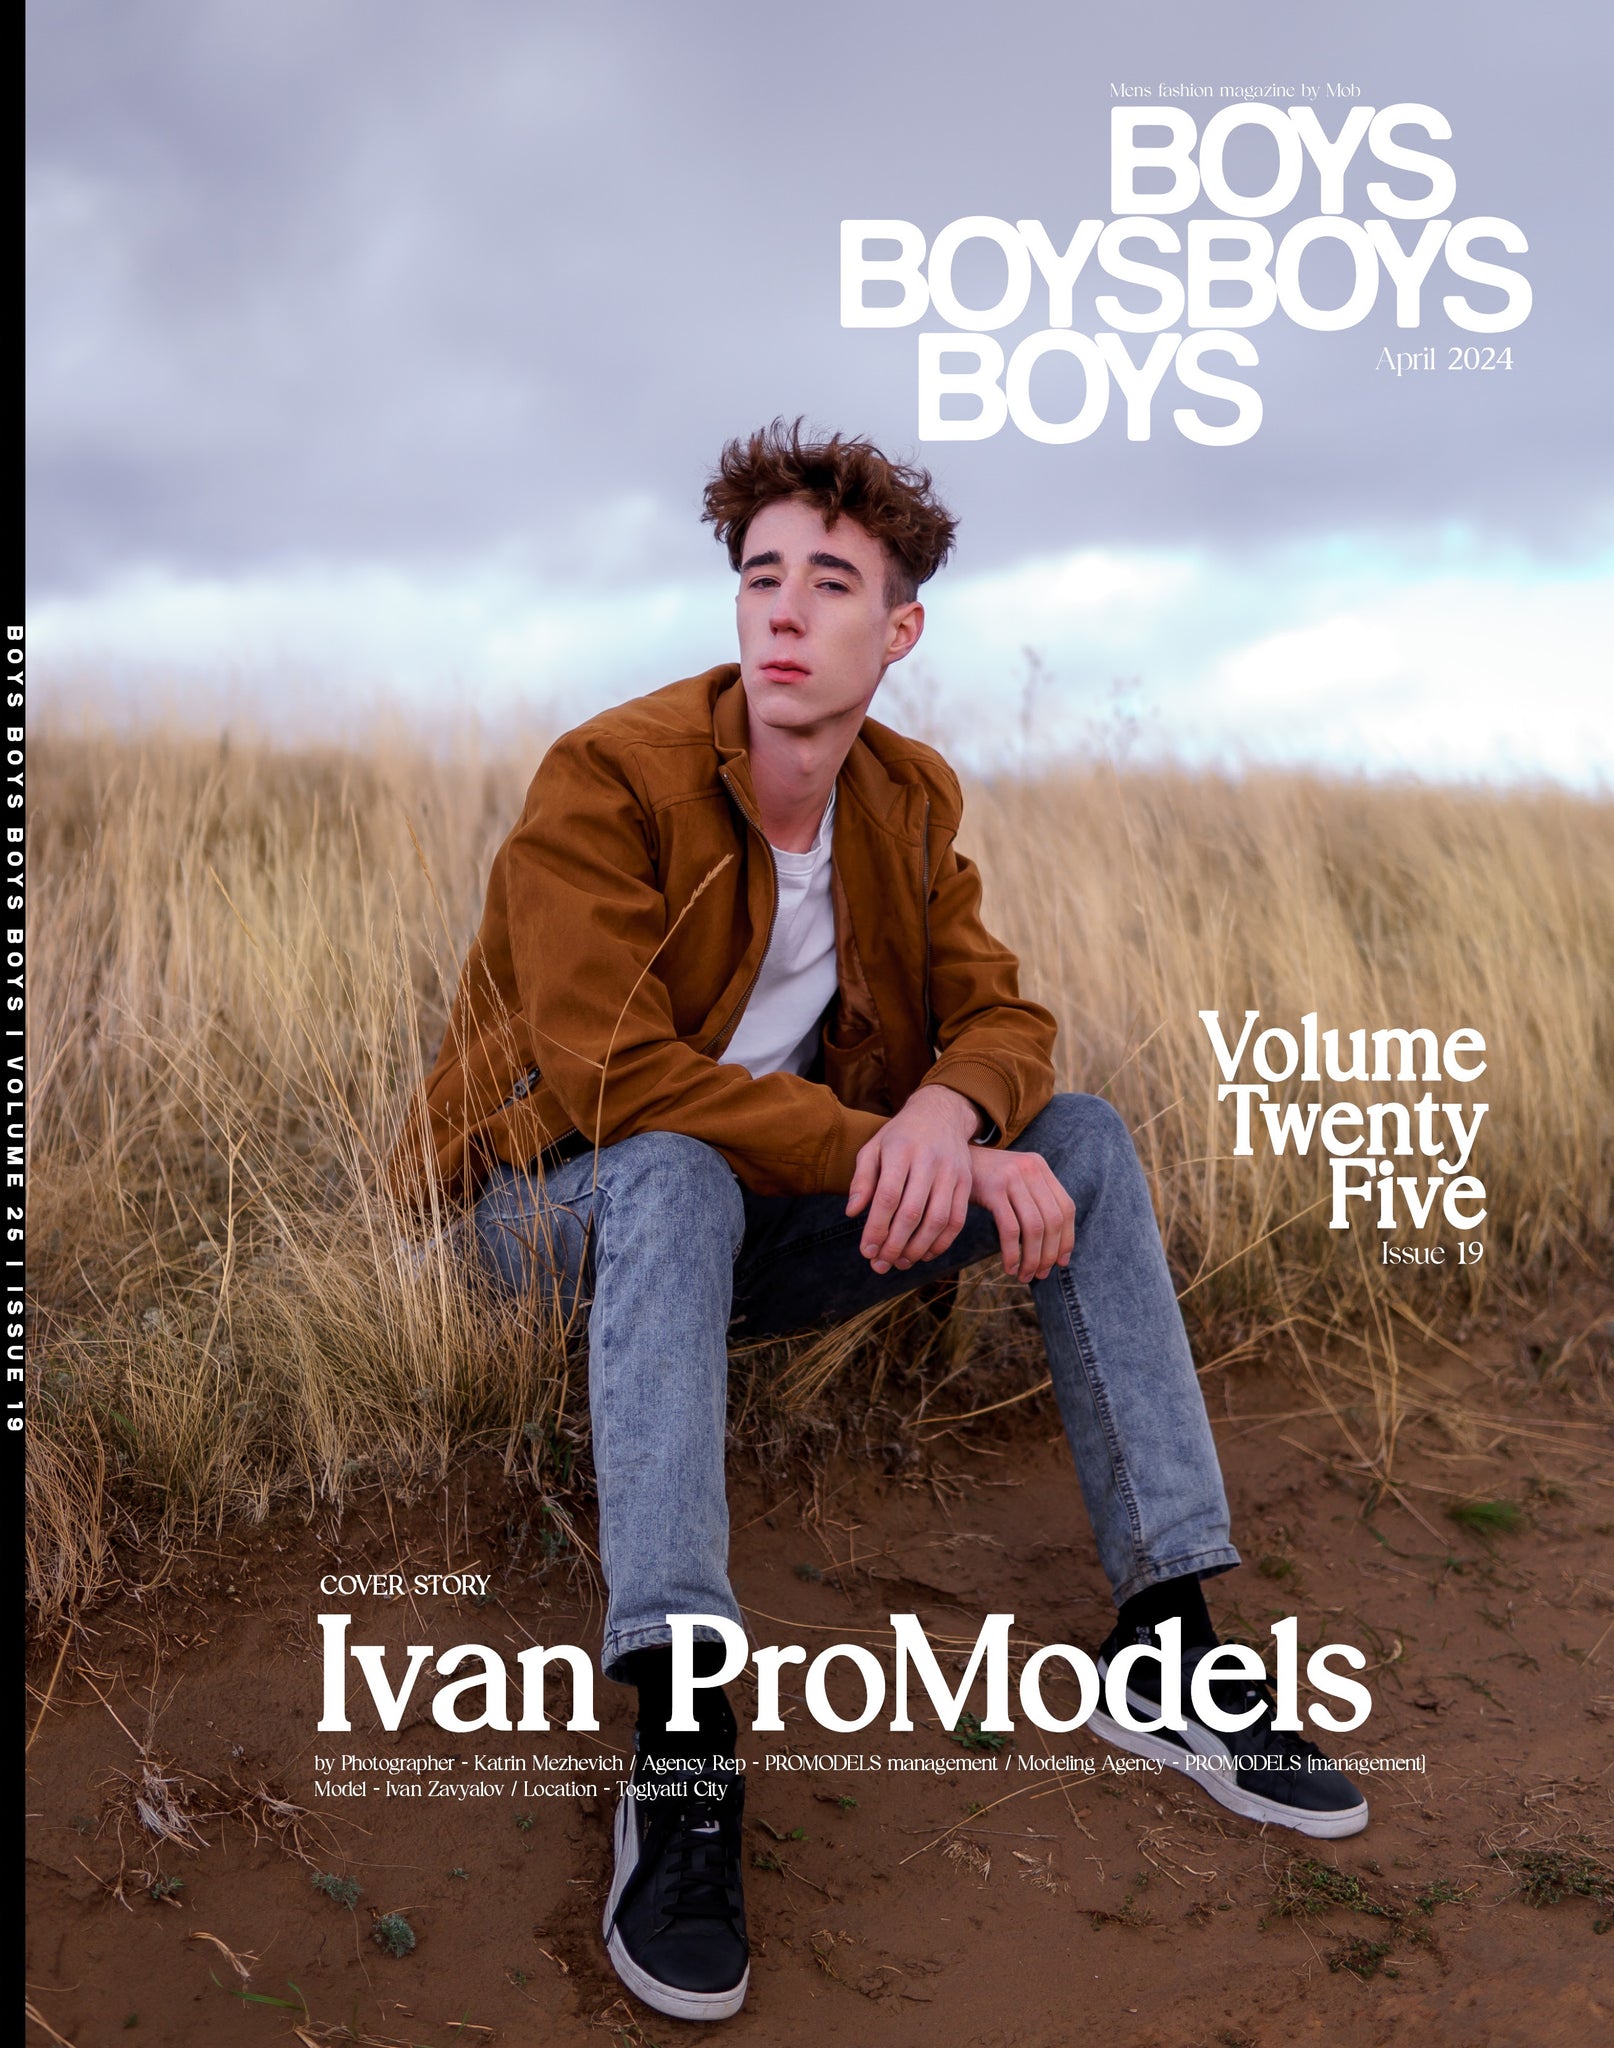 BOYS BOYS BOYS BOYS | VOLUME TWENTY FIVE | ISSUE #19